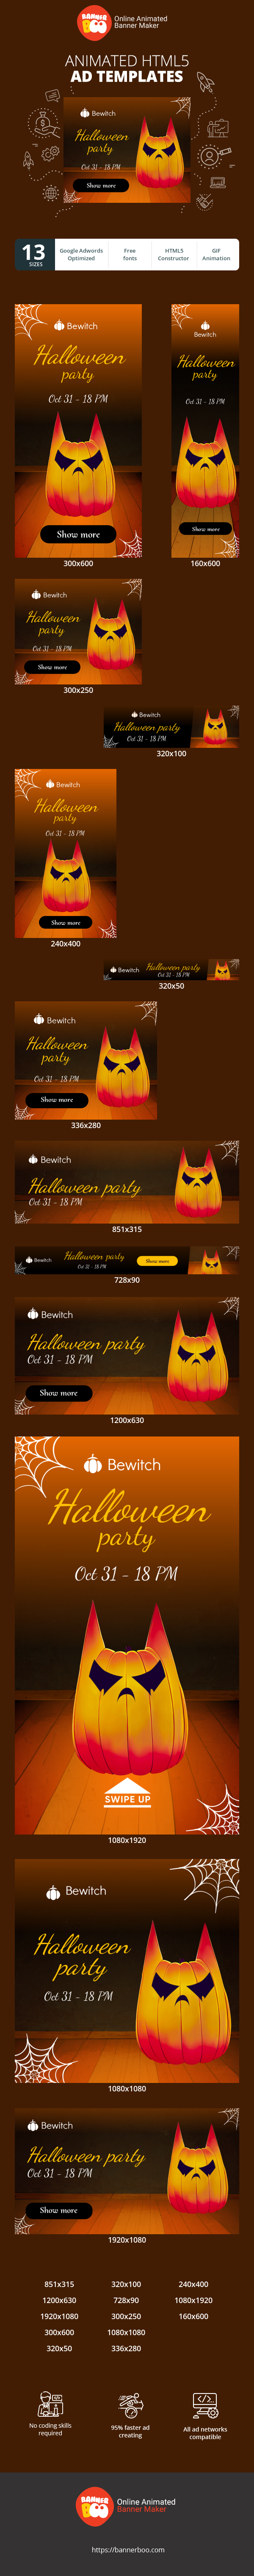 Шаблон рекламного банера — Halloween Party —  Oct 31 - 18PM